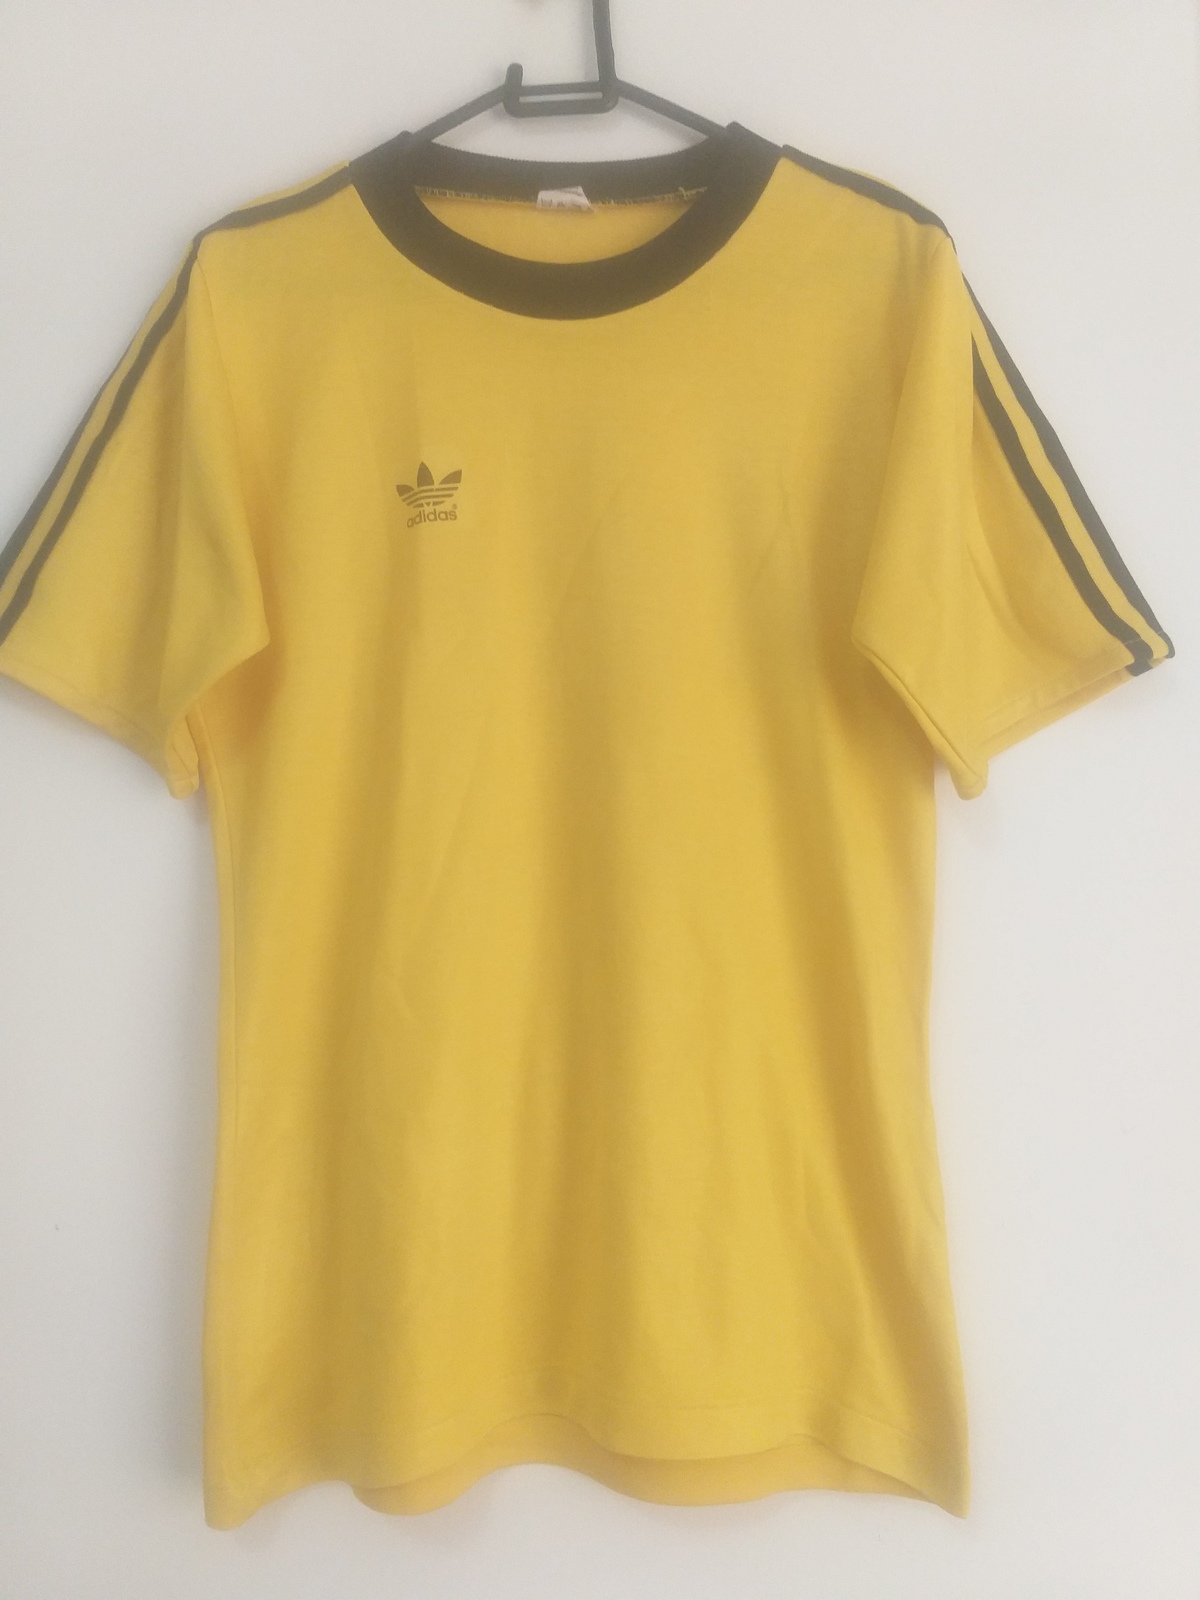 Jersey / Shirt Borussia Dortmund 1974 / 1975 -  Very Rare - $300.00